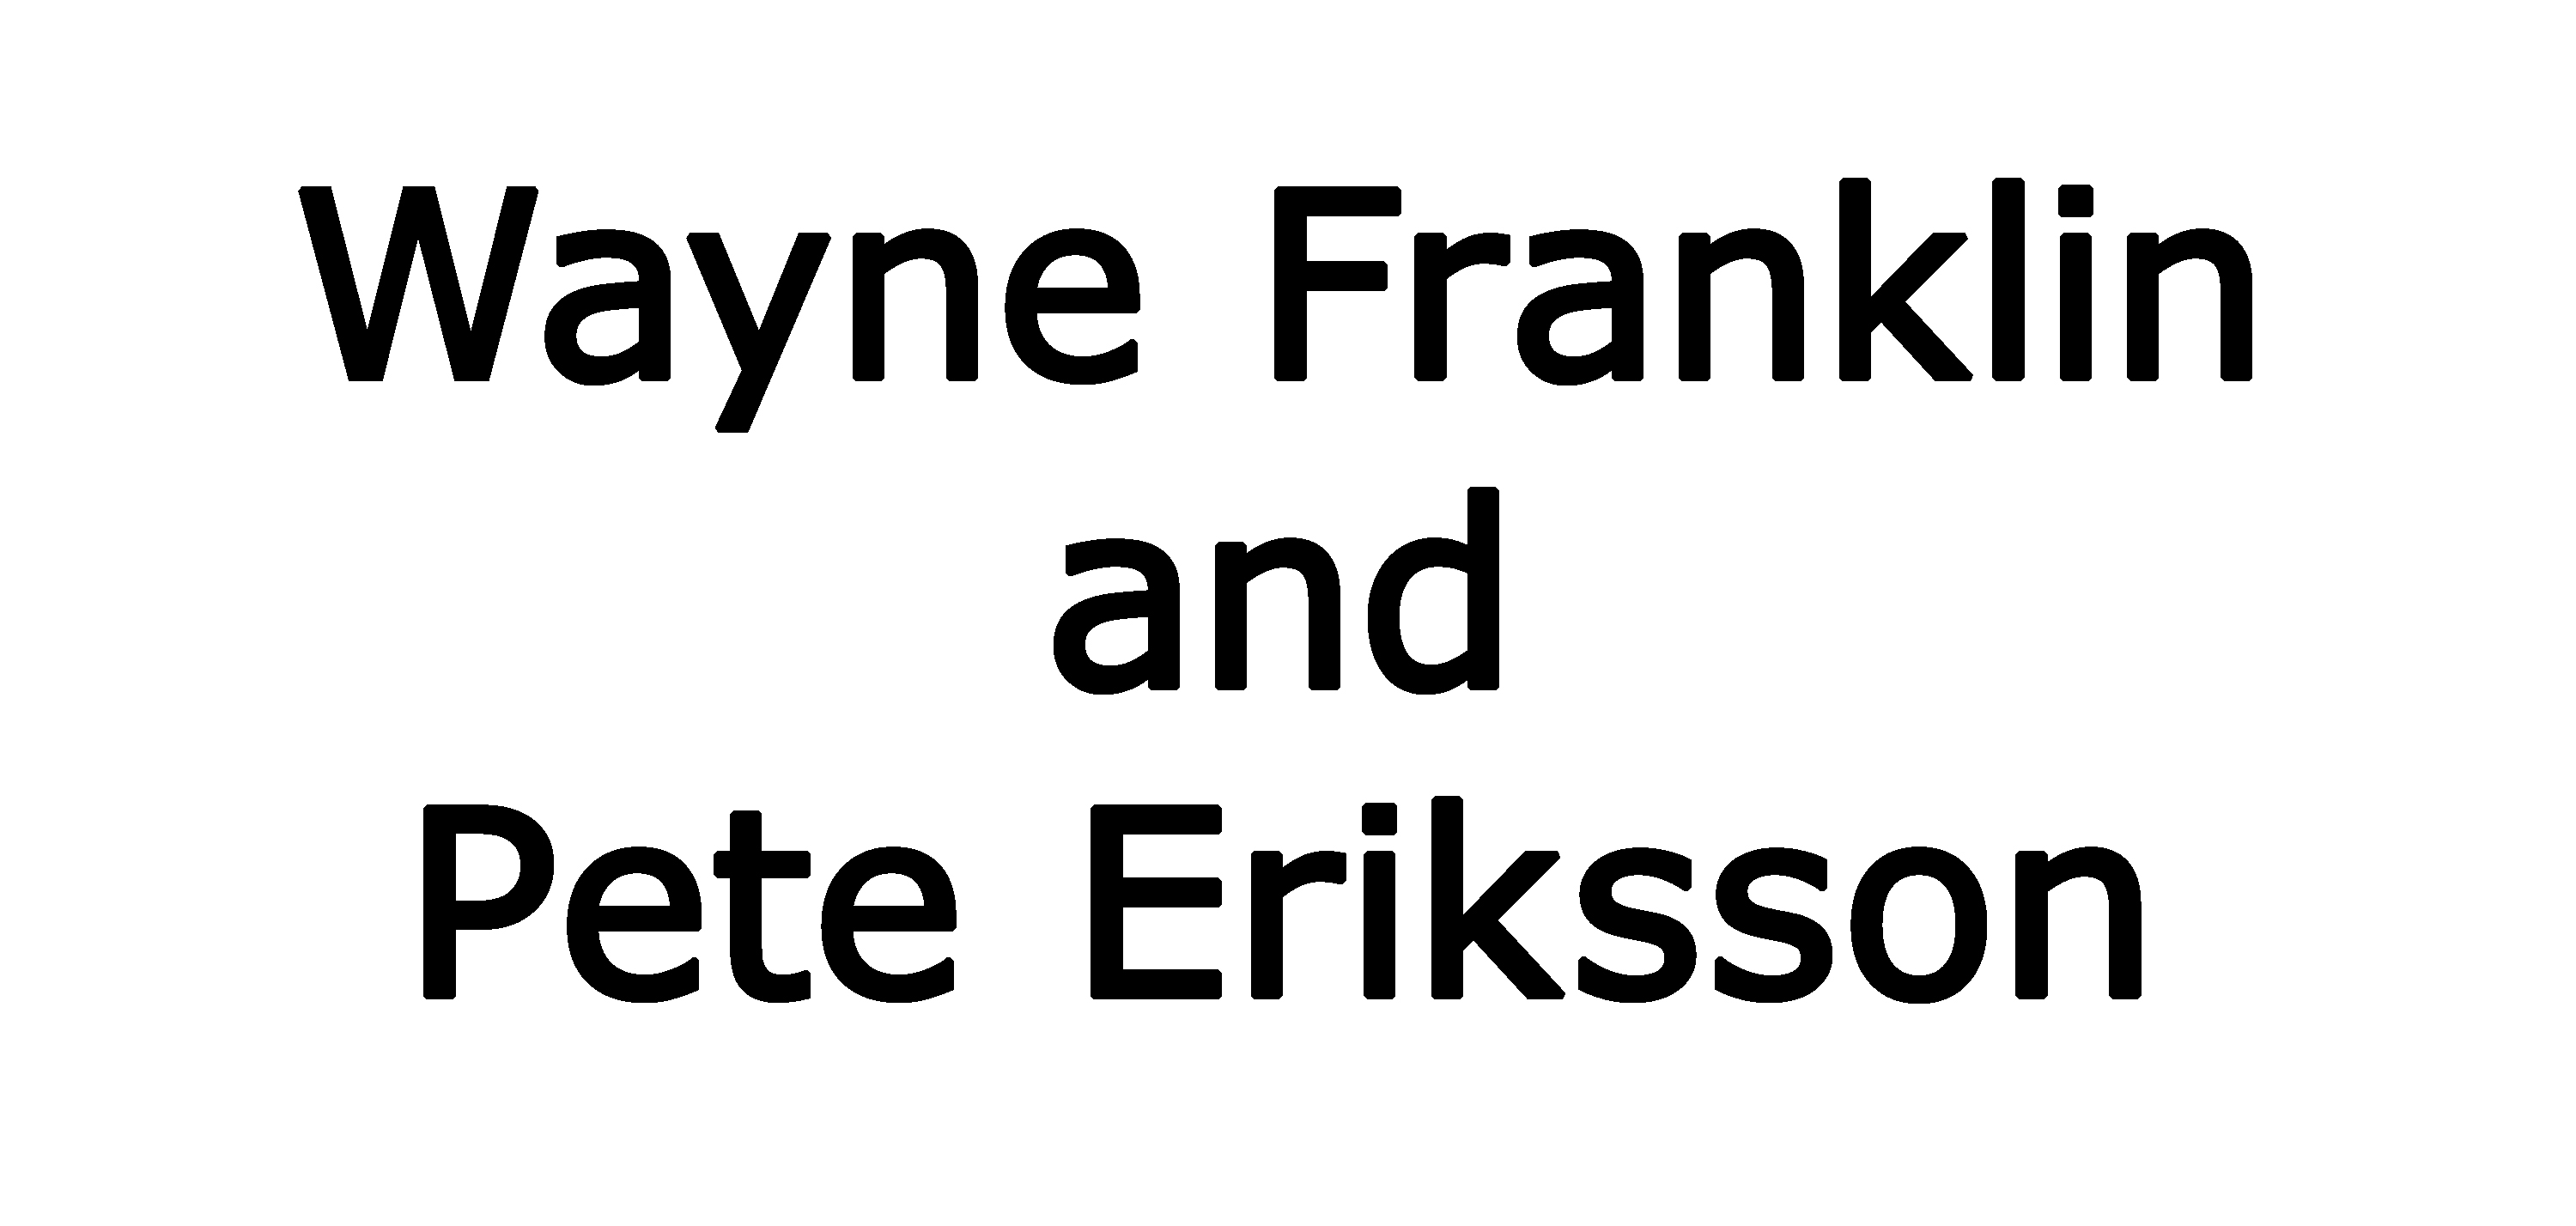 Wayne Franklin & Pete Eriksson